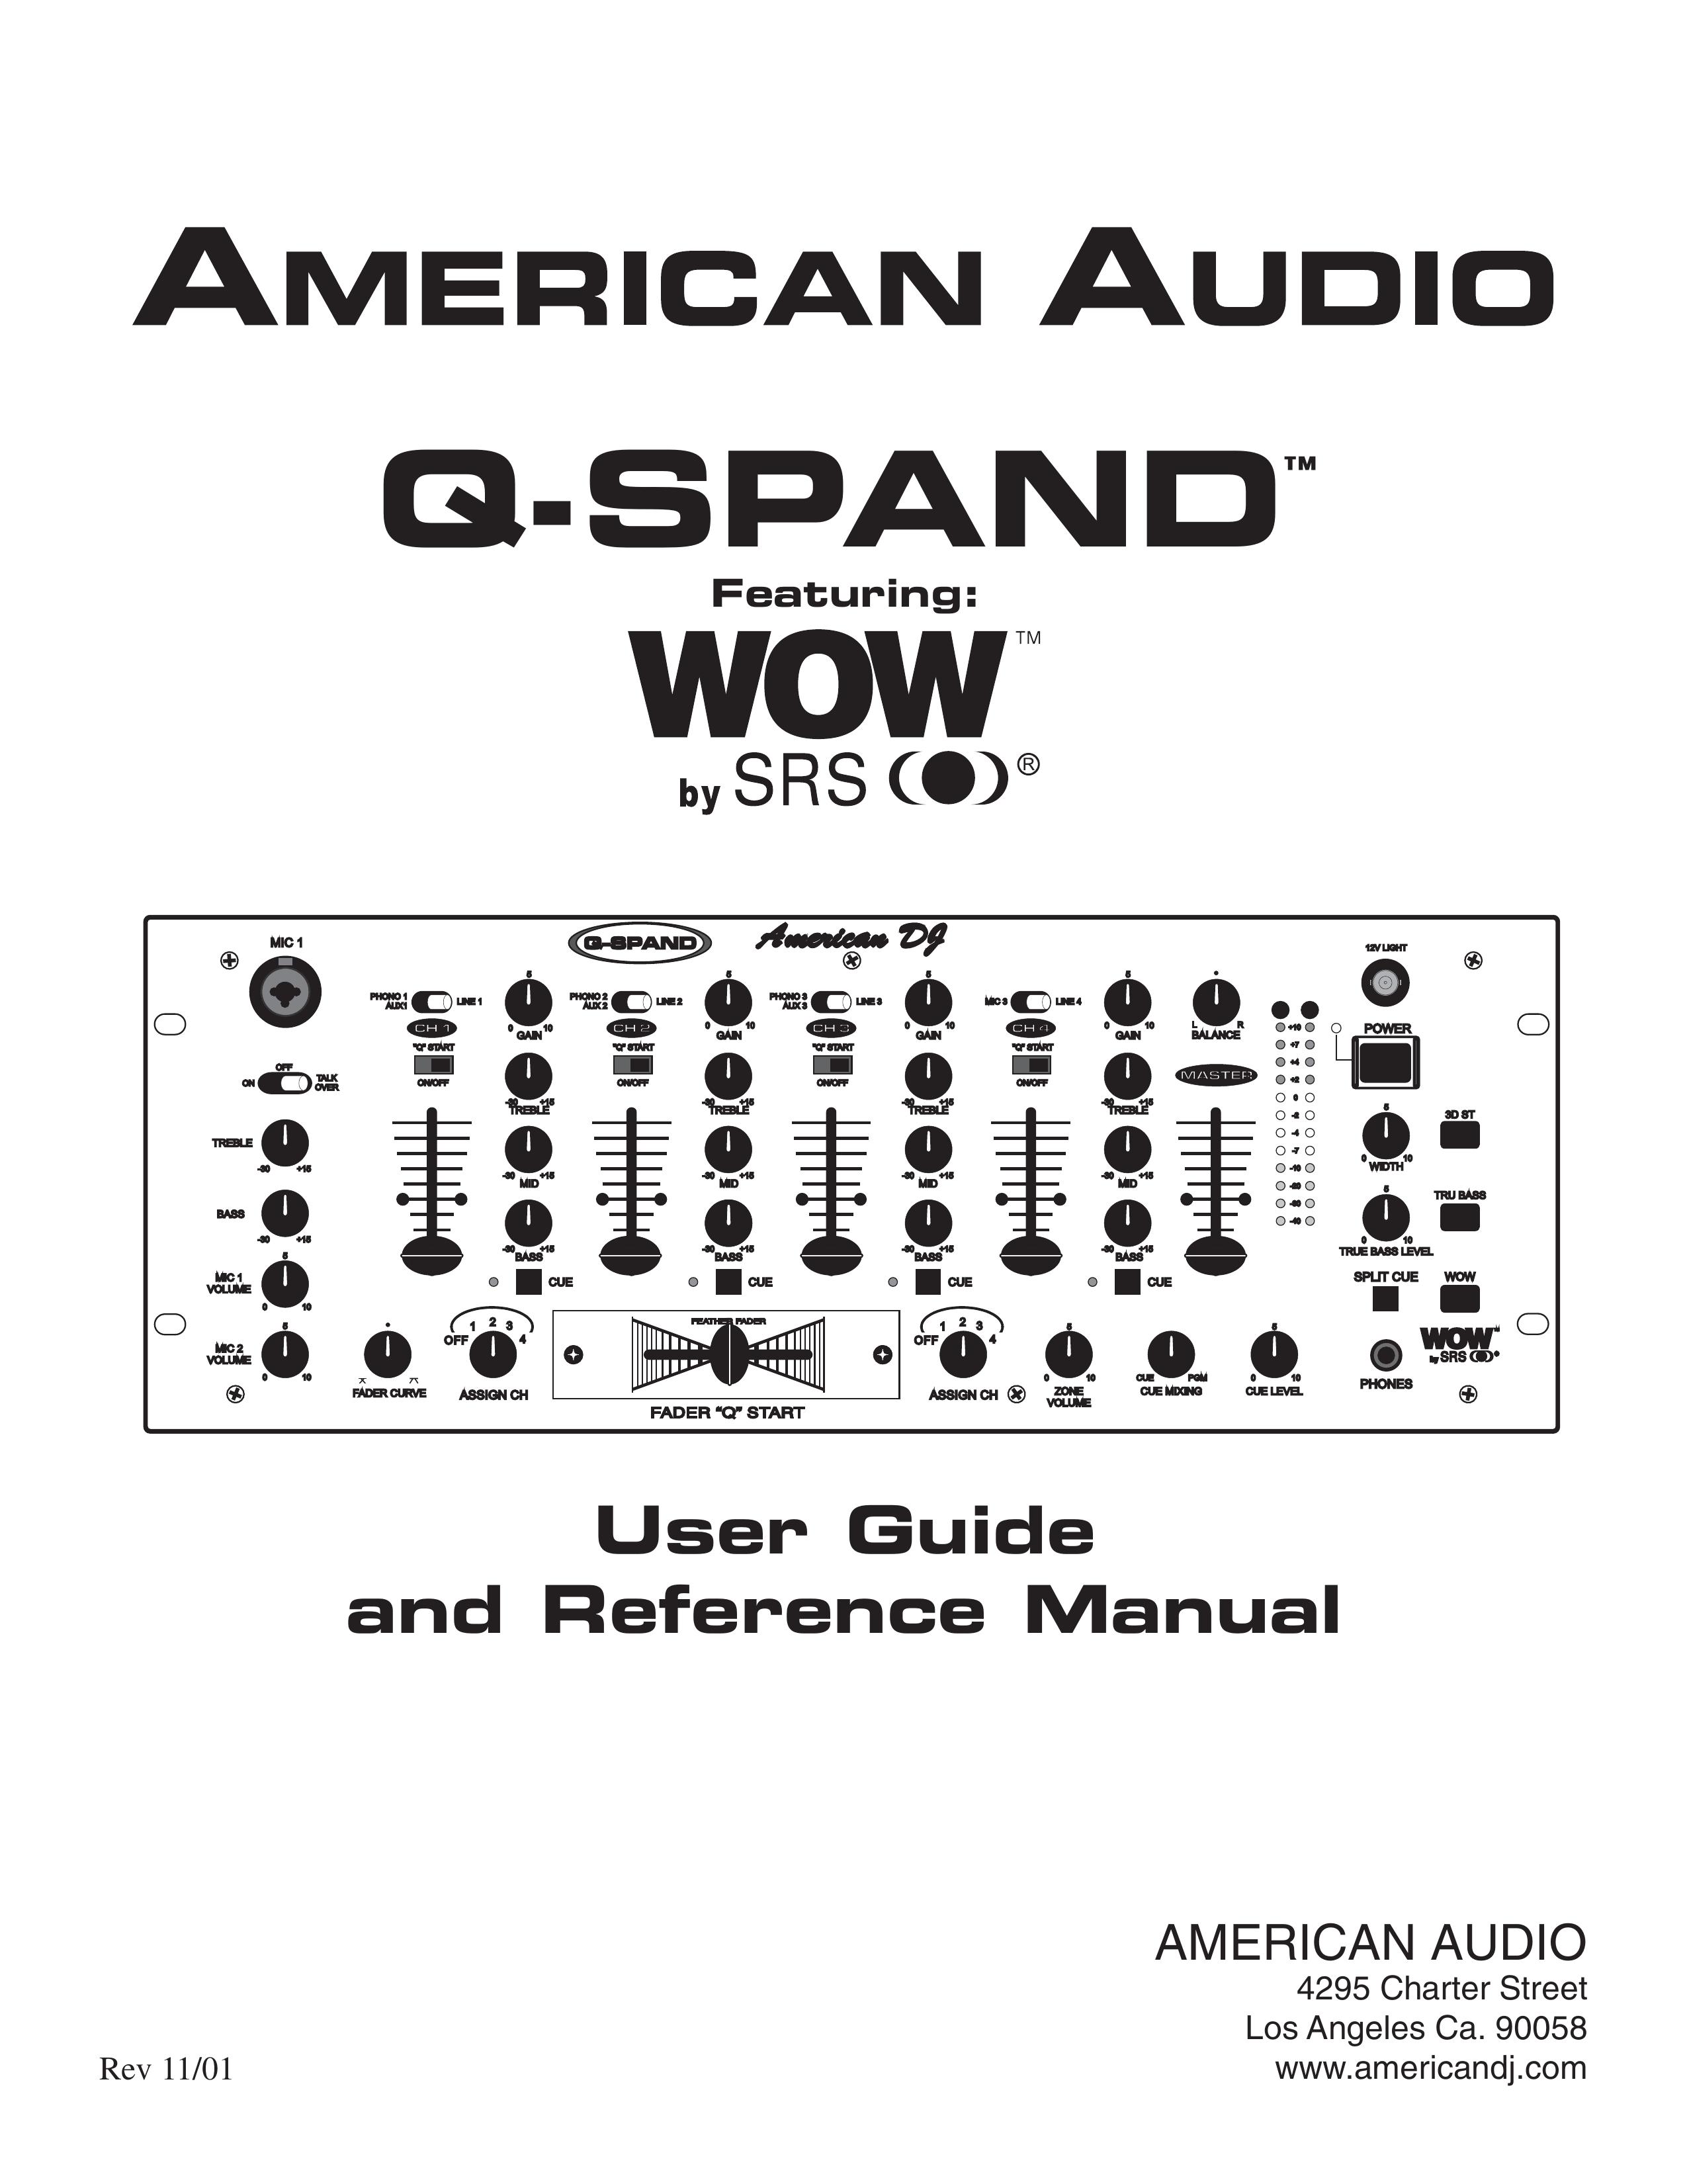 American Audio Q-SPAND DJ Equipment User Manual